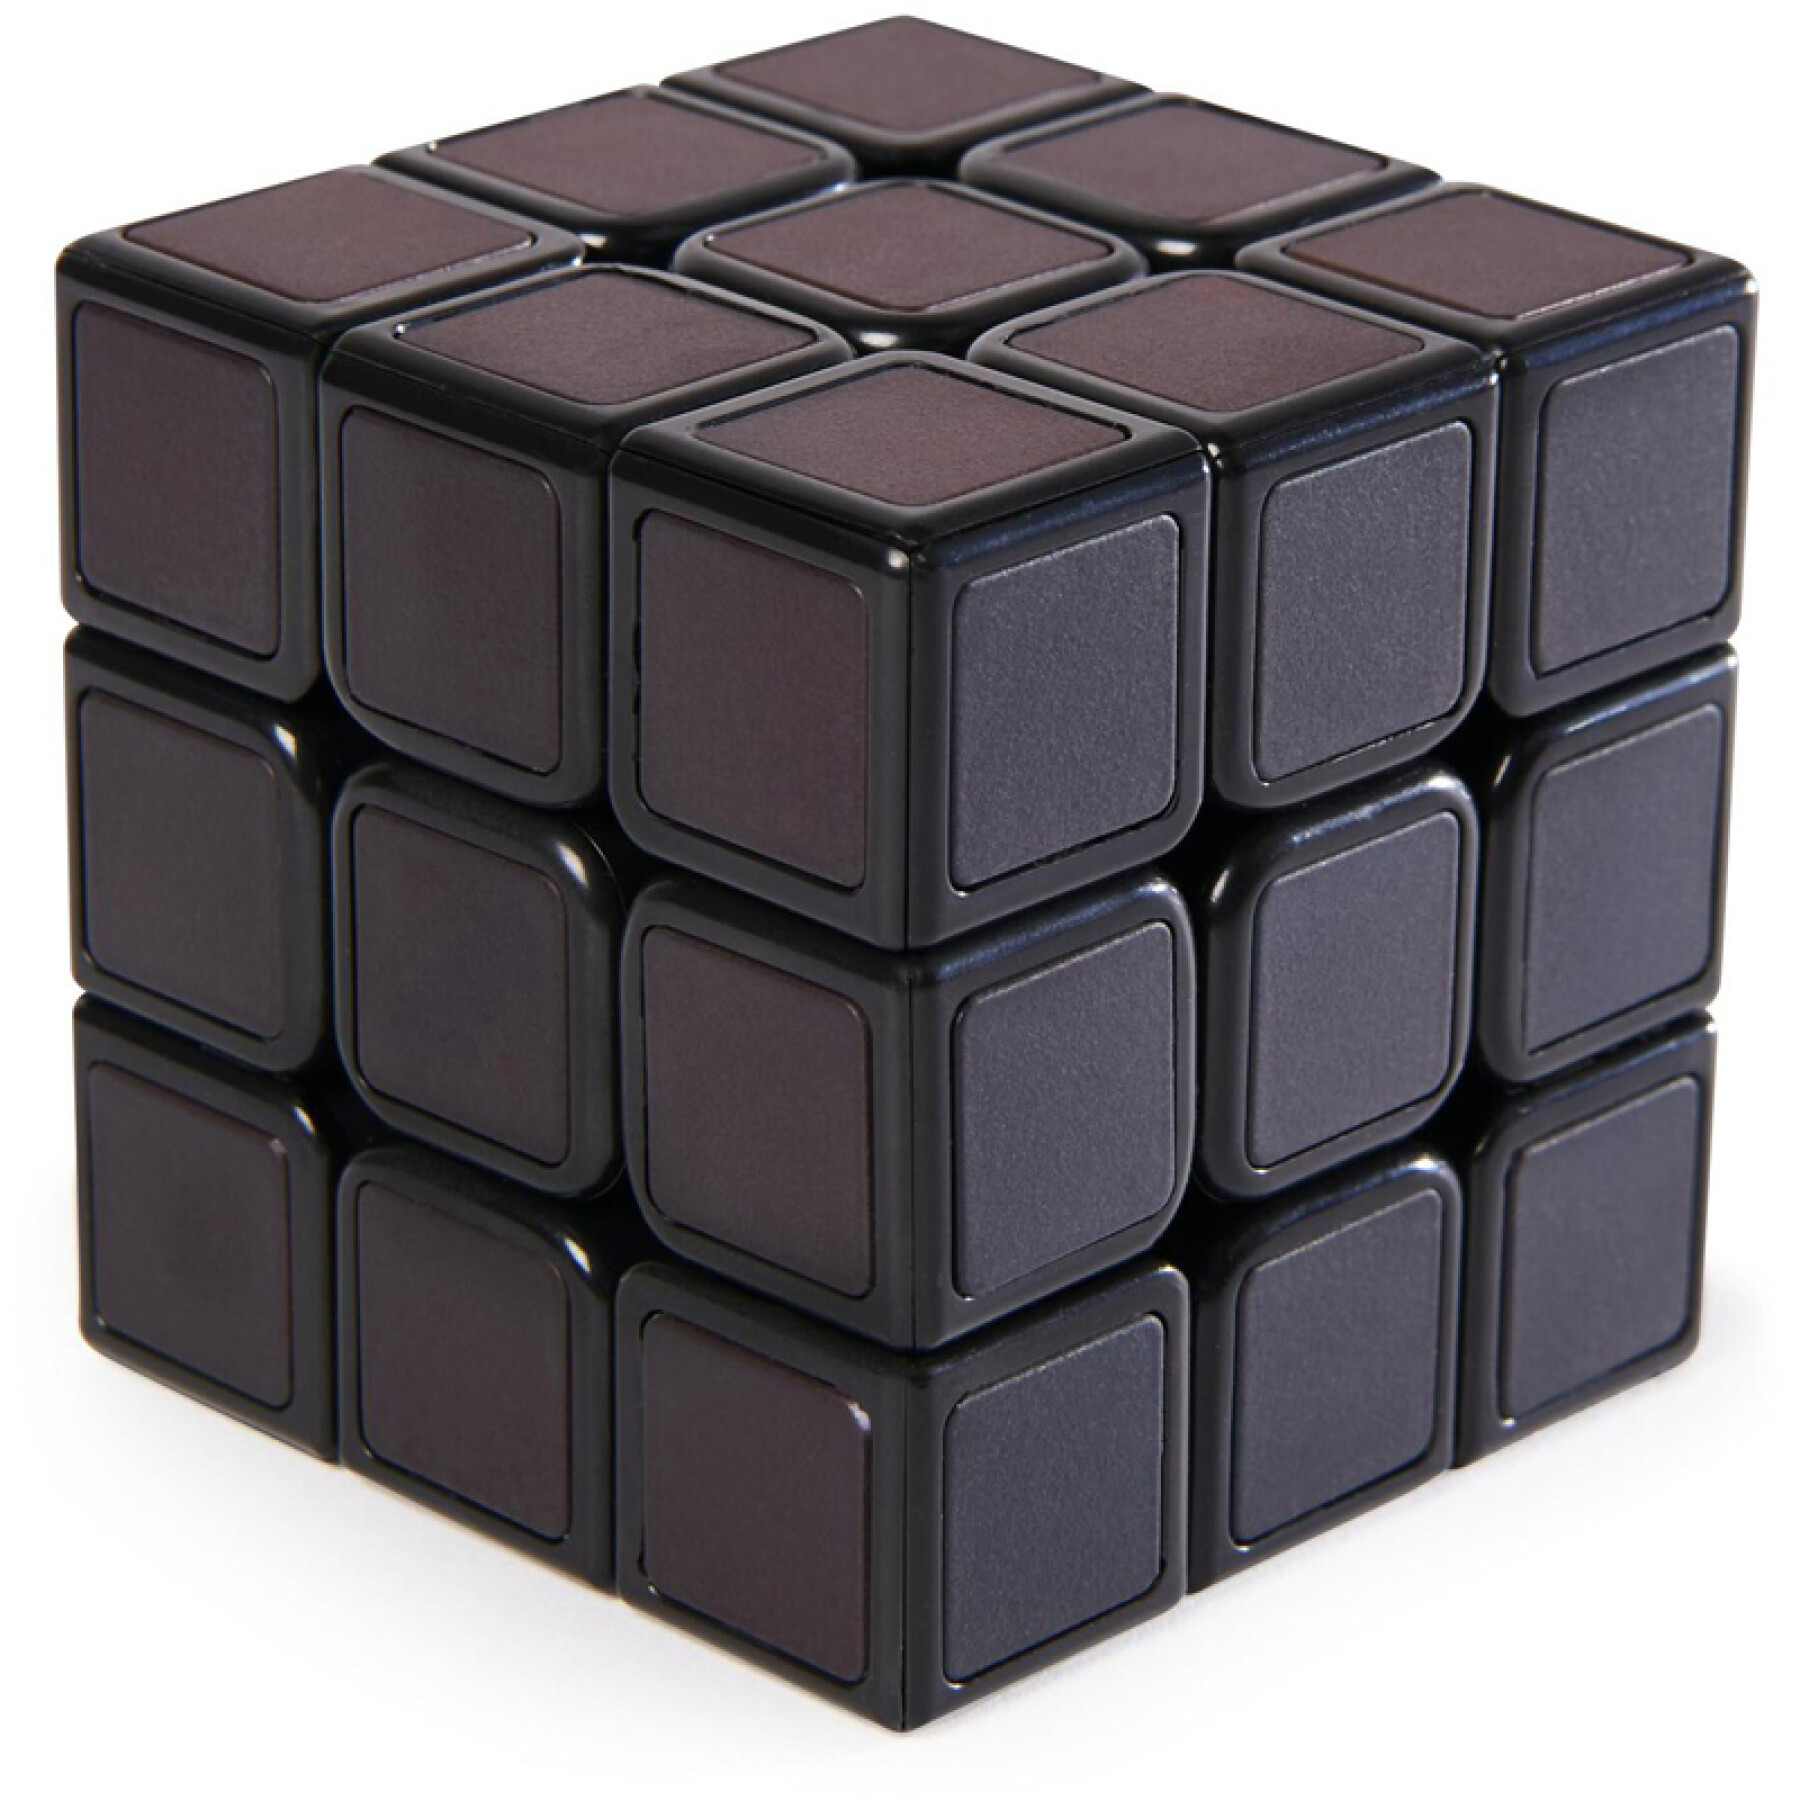 Juegos de mesa cubo de rubiks 3x3 phantom Spin Master